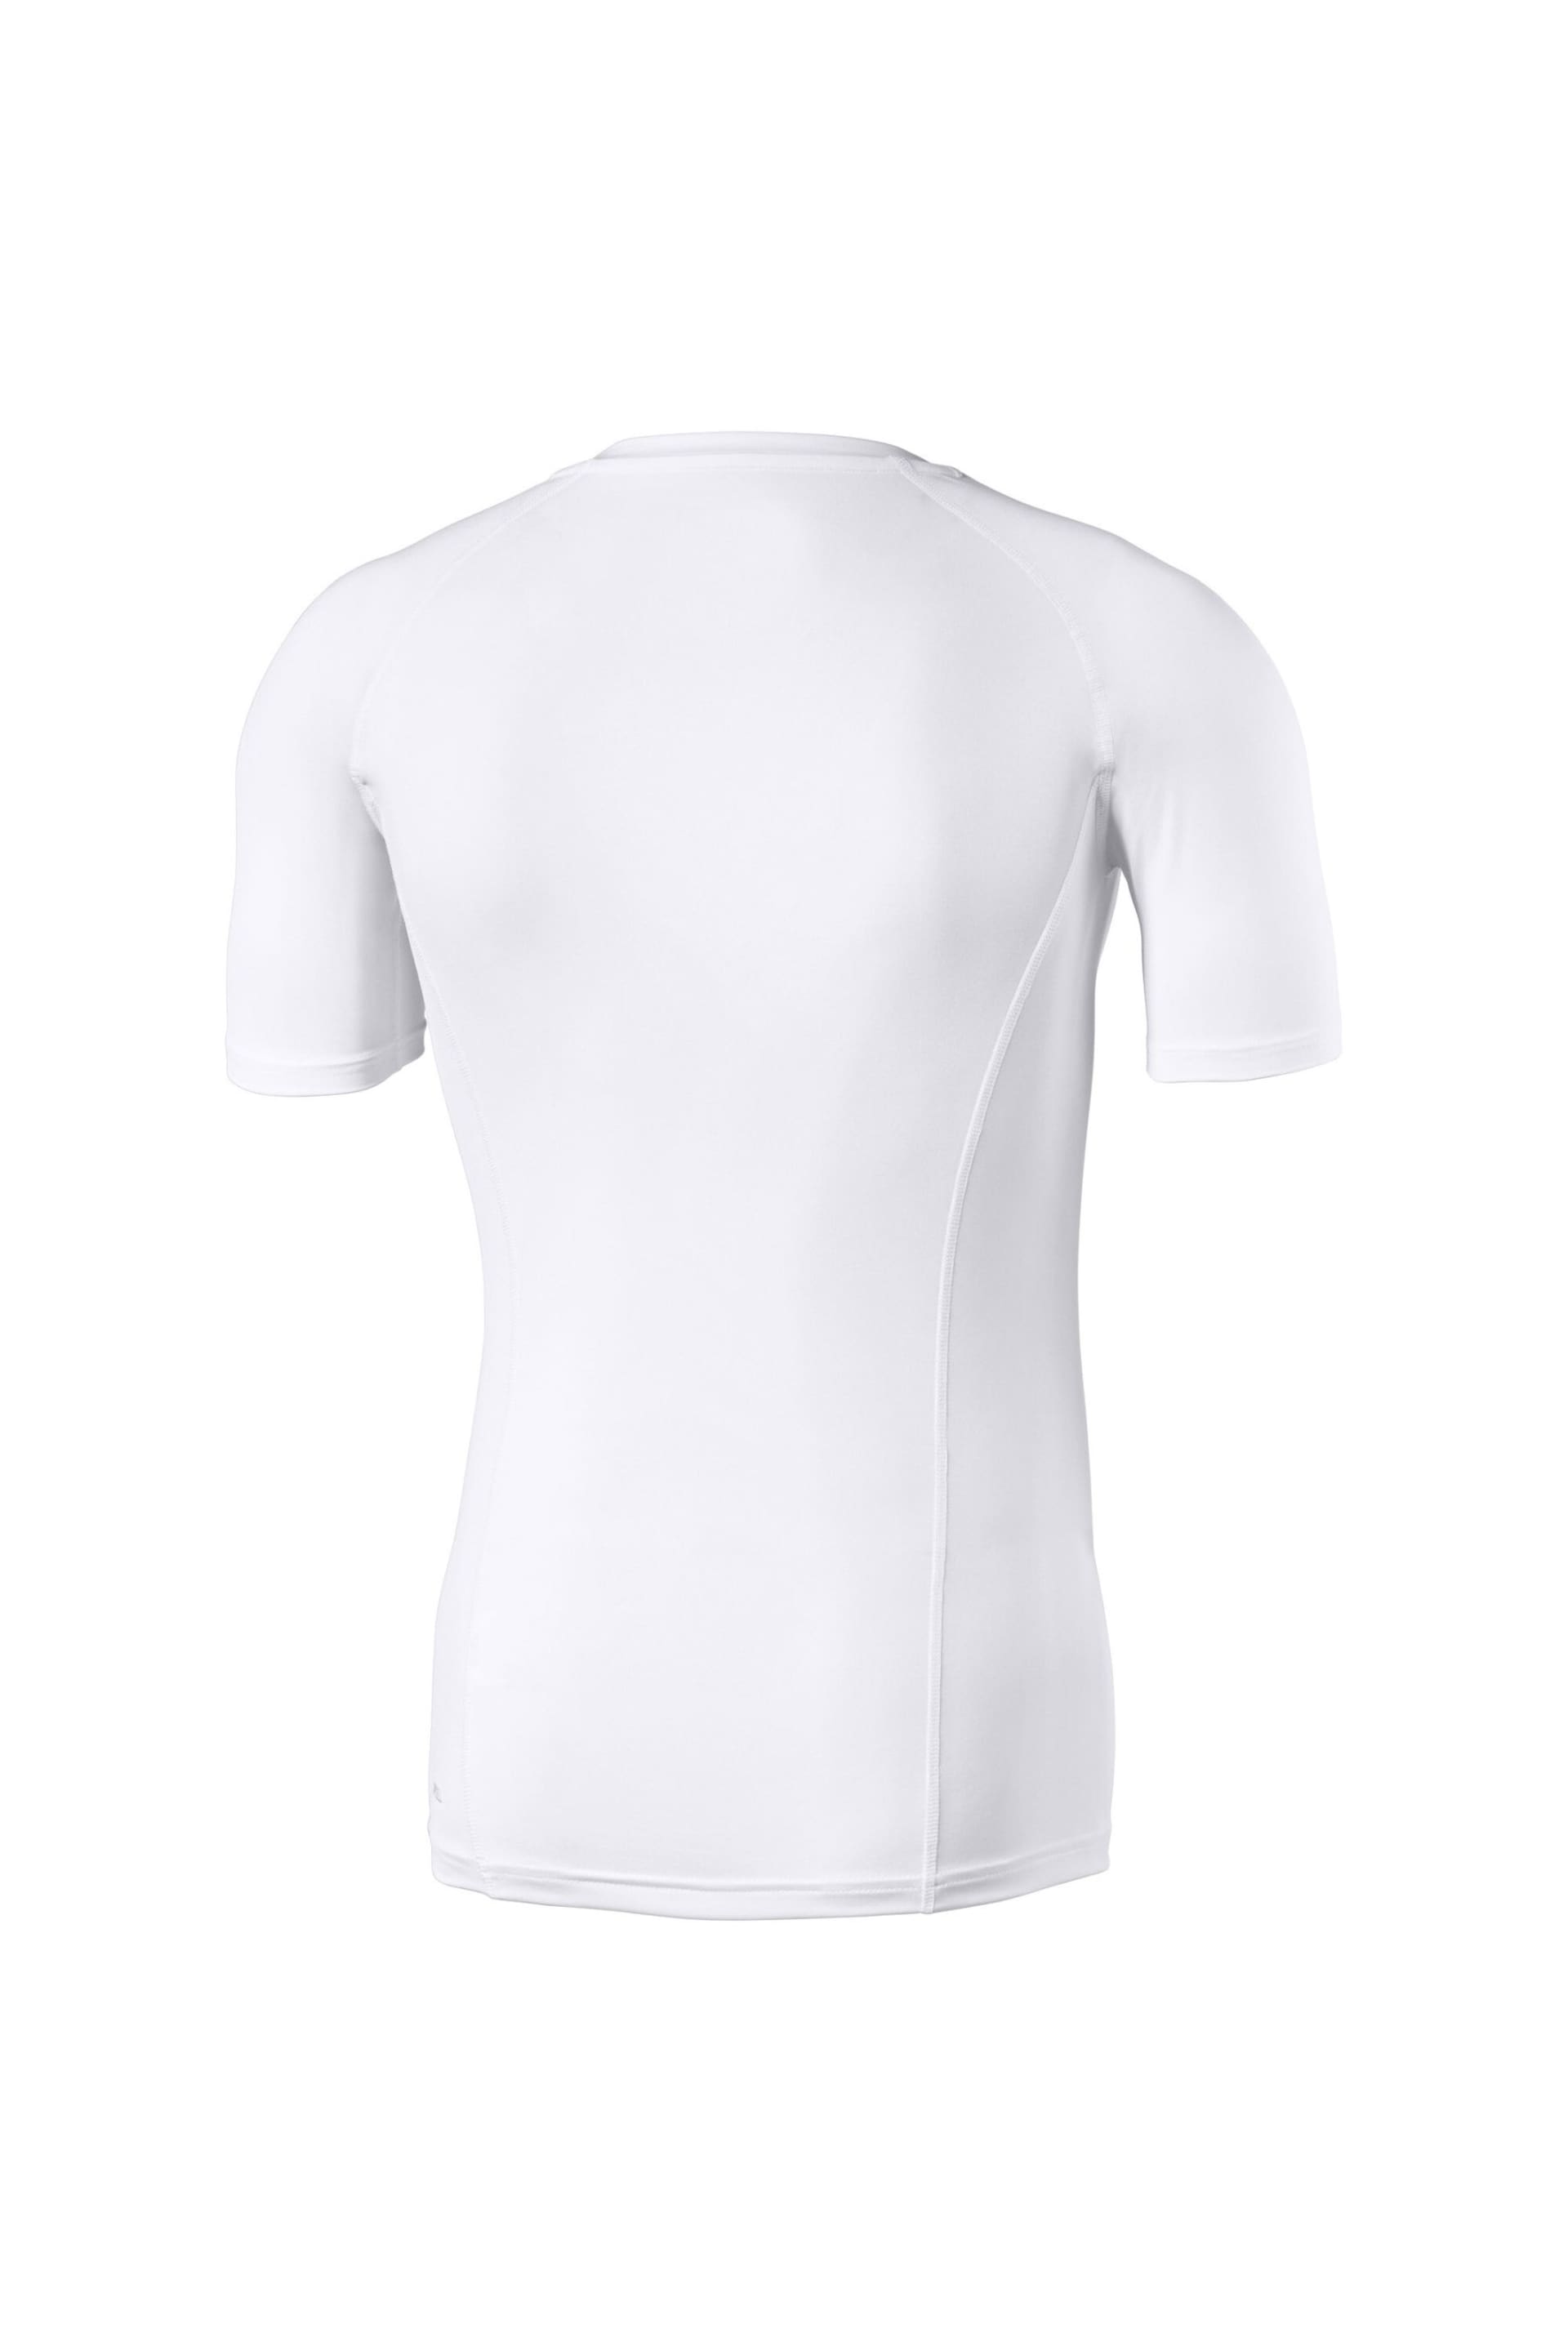 Puma White Mens LIGA Baselayer Short Sleeve T-Shirt - Image 2 of 2